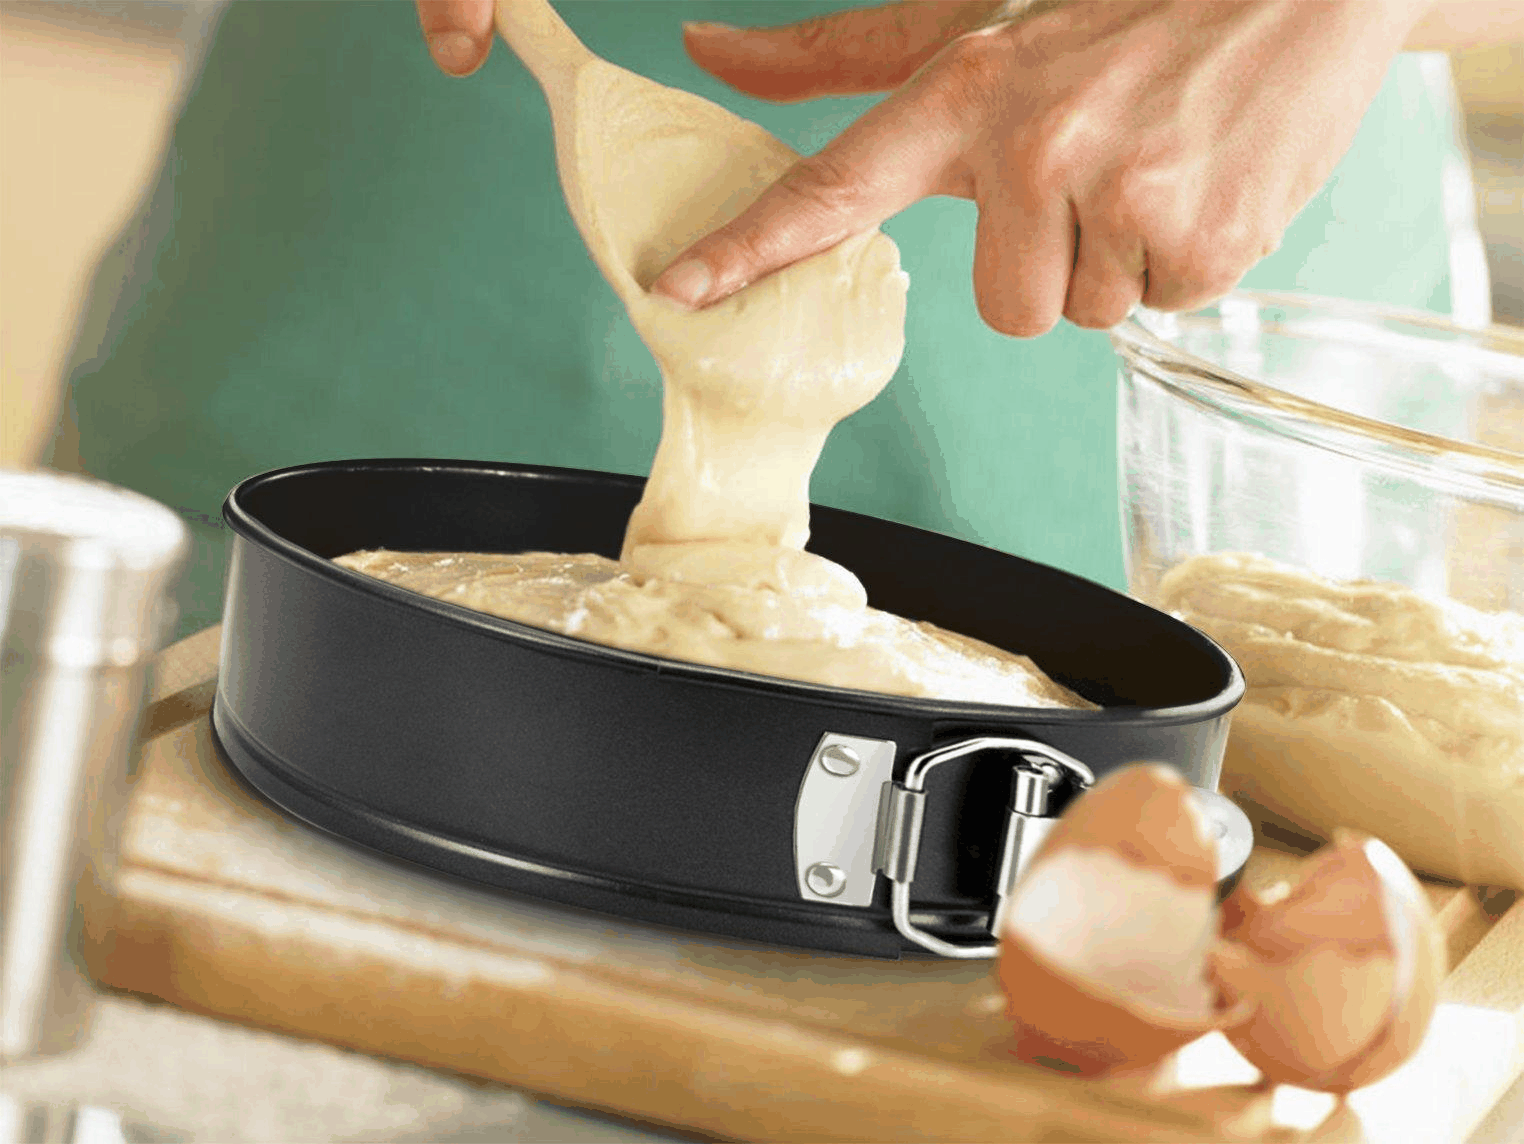 7 Springform Cake Pan - Premium Instant Pot Accessories & Add-ons